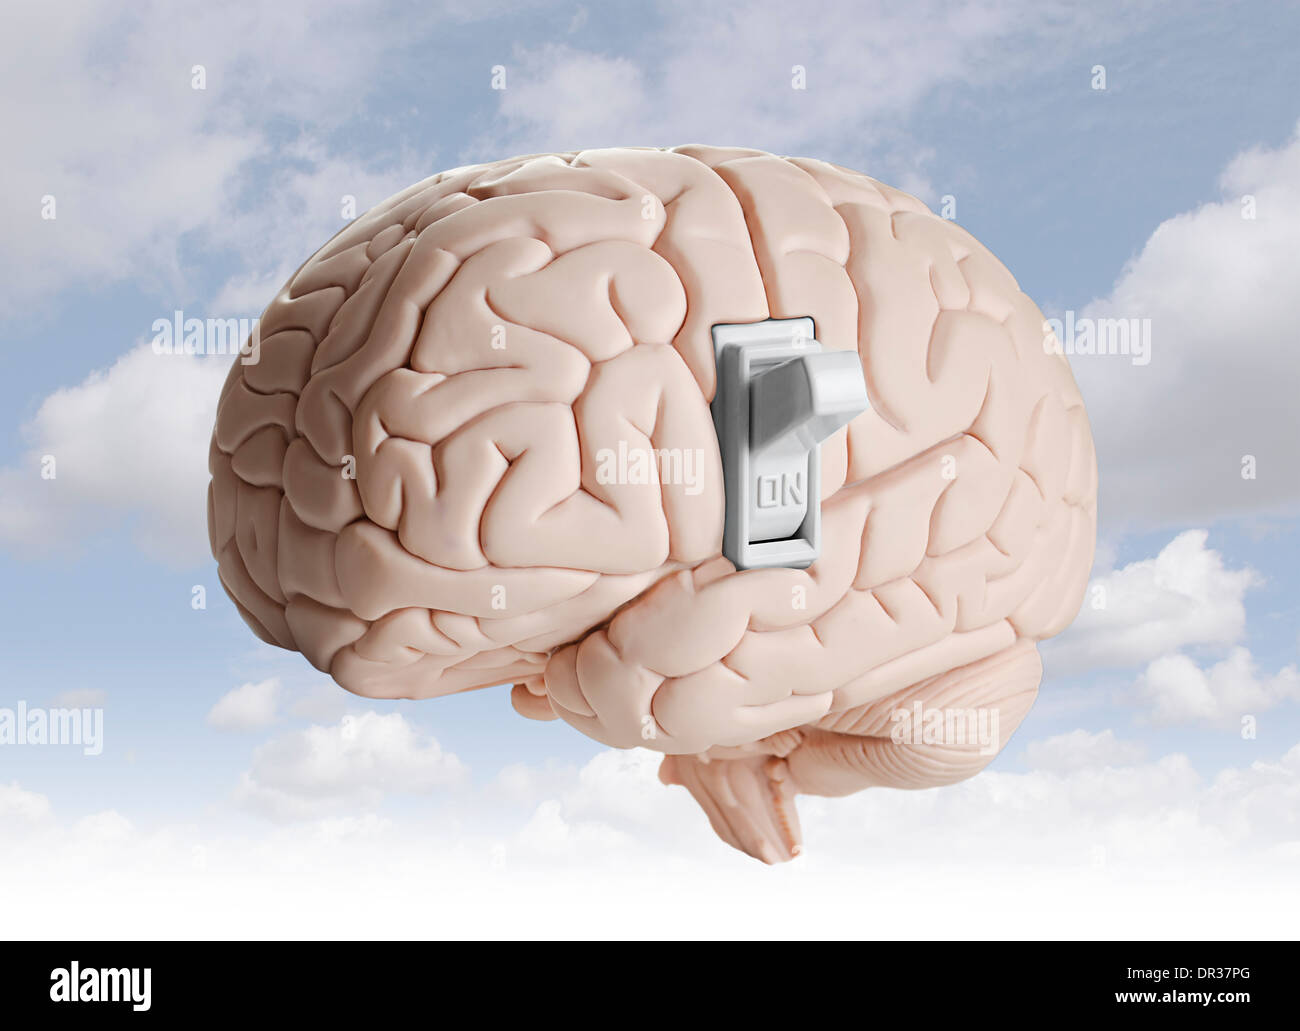 Brain power. Brain model with a light switch Stock Photo